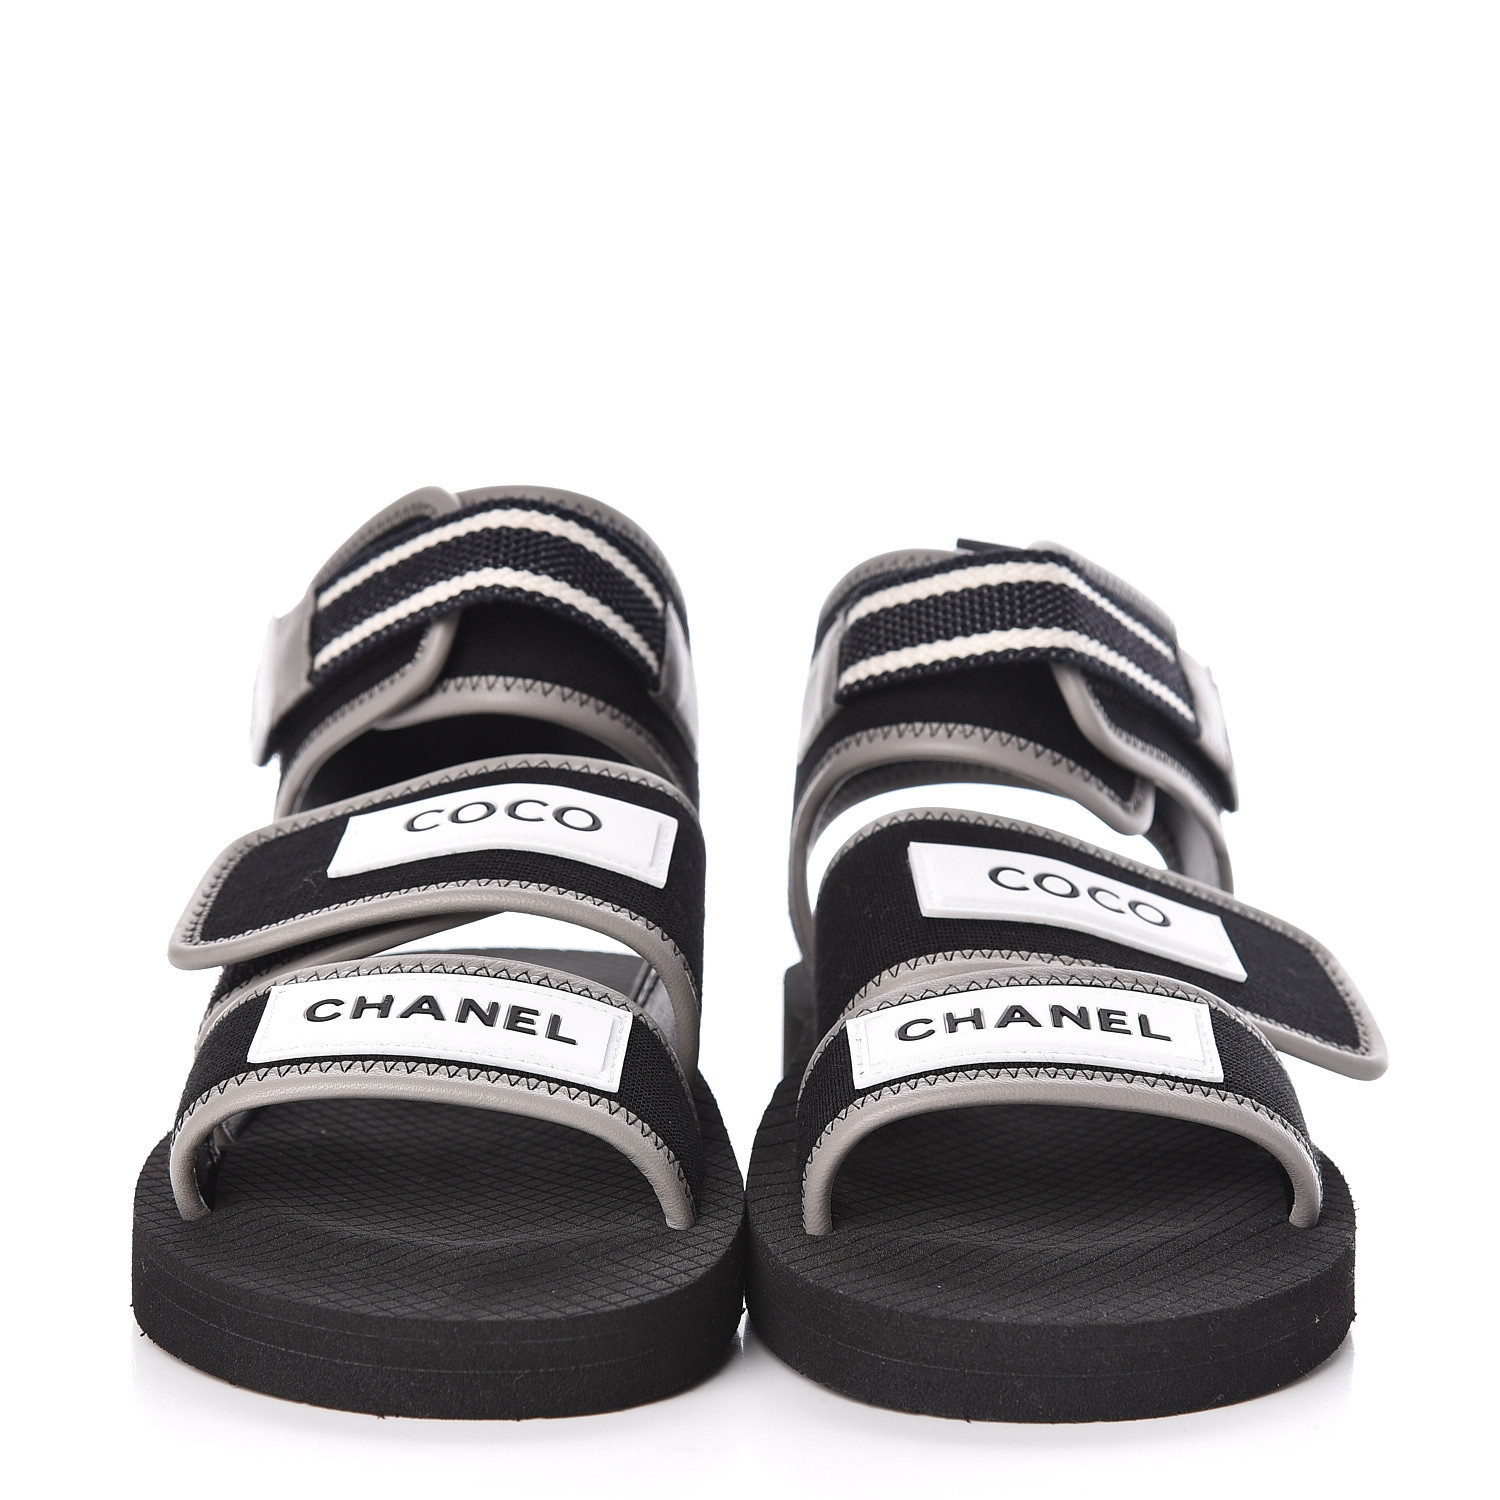 coco chanel sandals